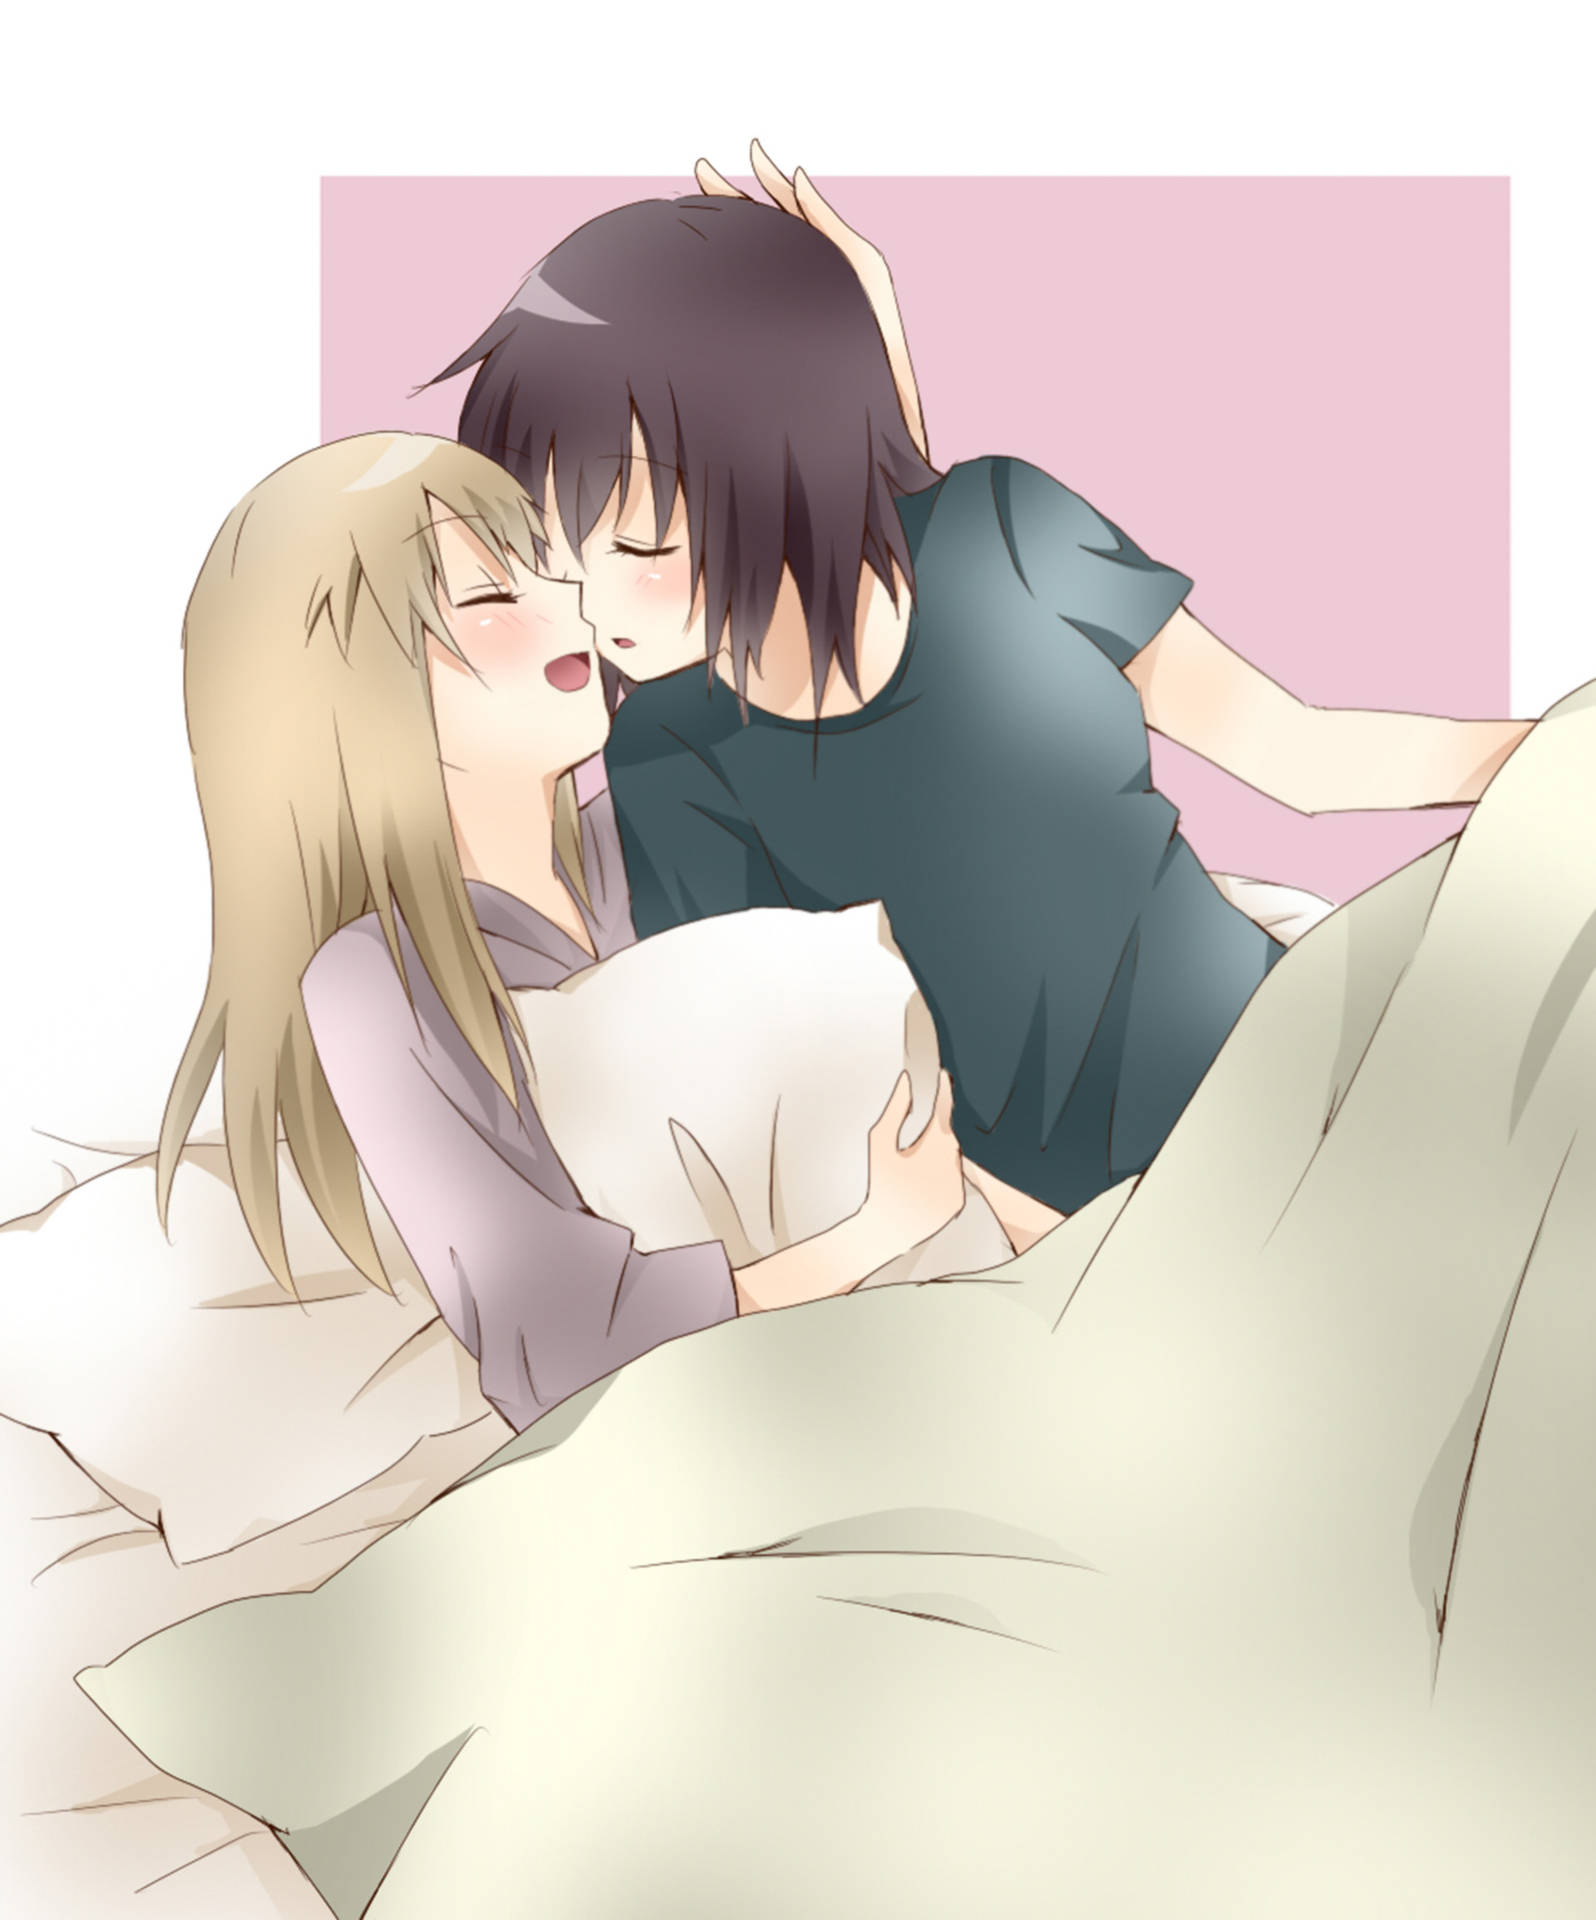 Cuddling Anime Lesbian Wallpaper